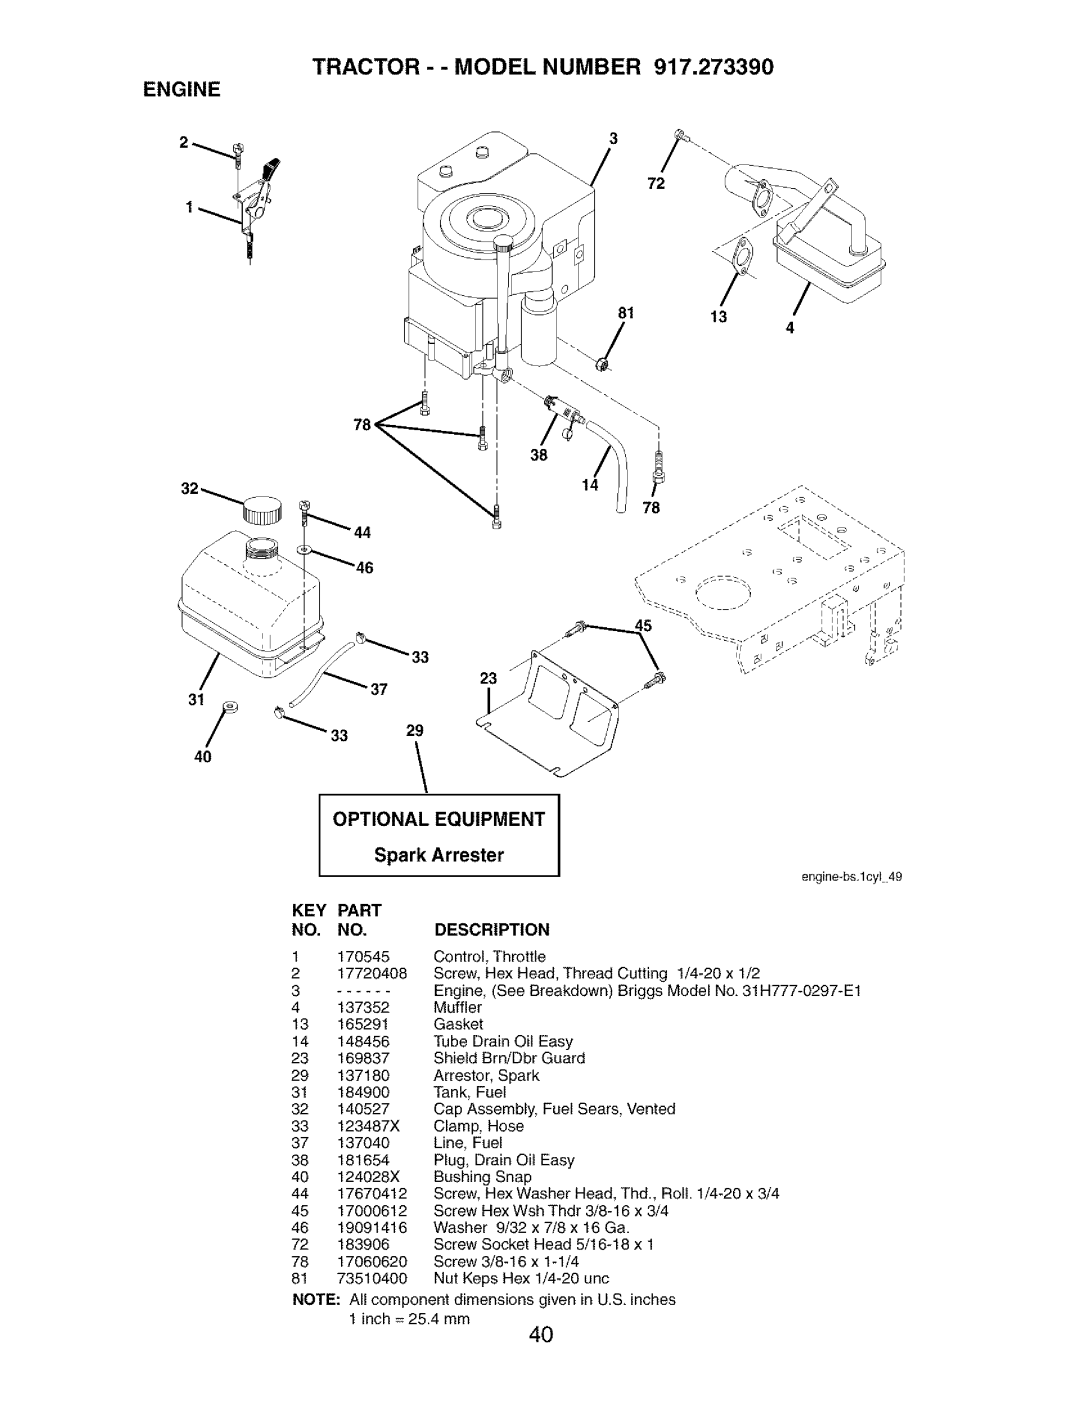 Craftsman 917.27339 owner manual Tractor - Model Number, Engine, Optional Equipment 